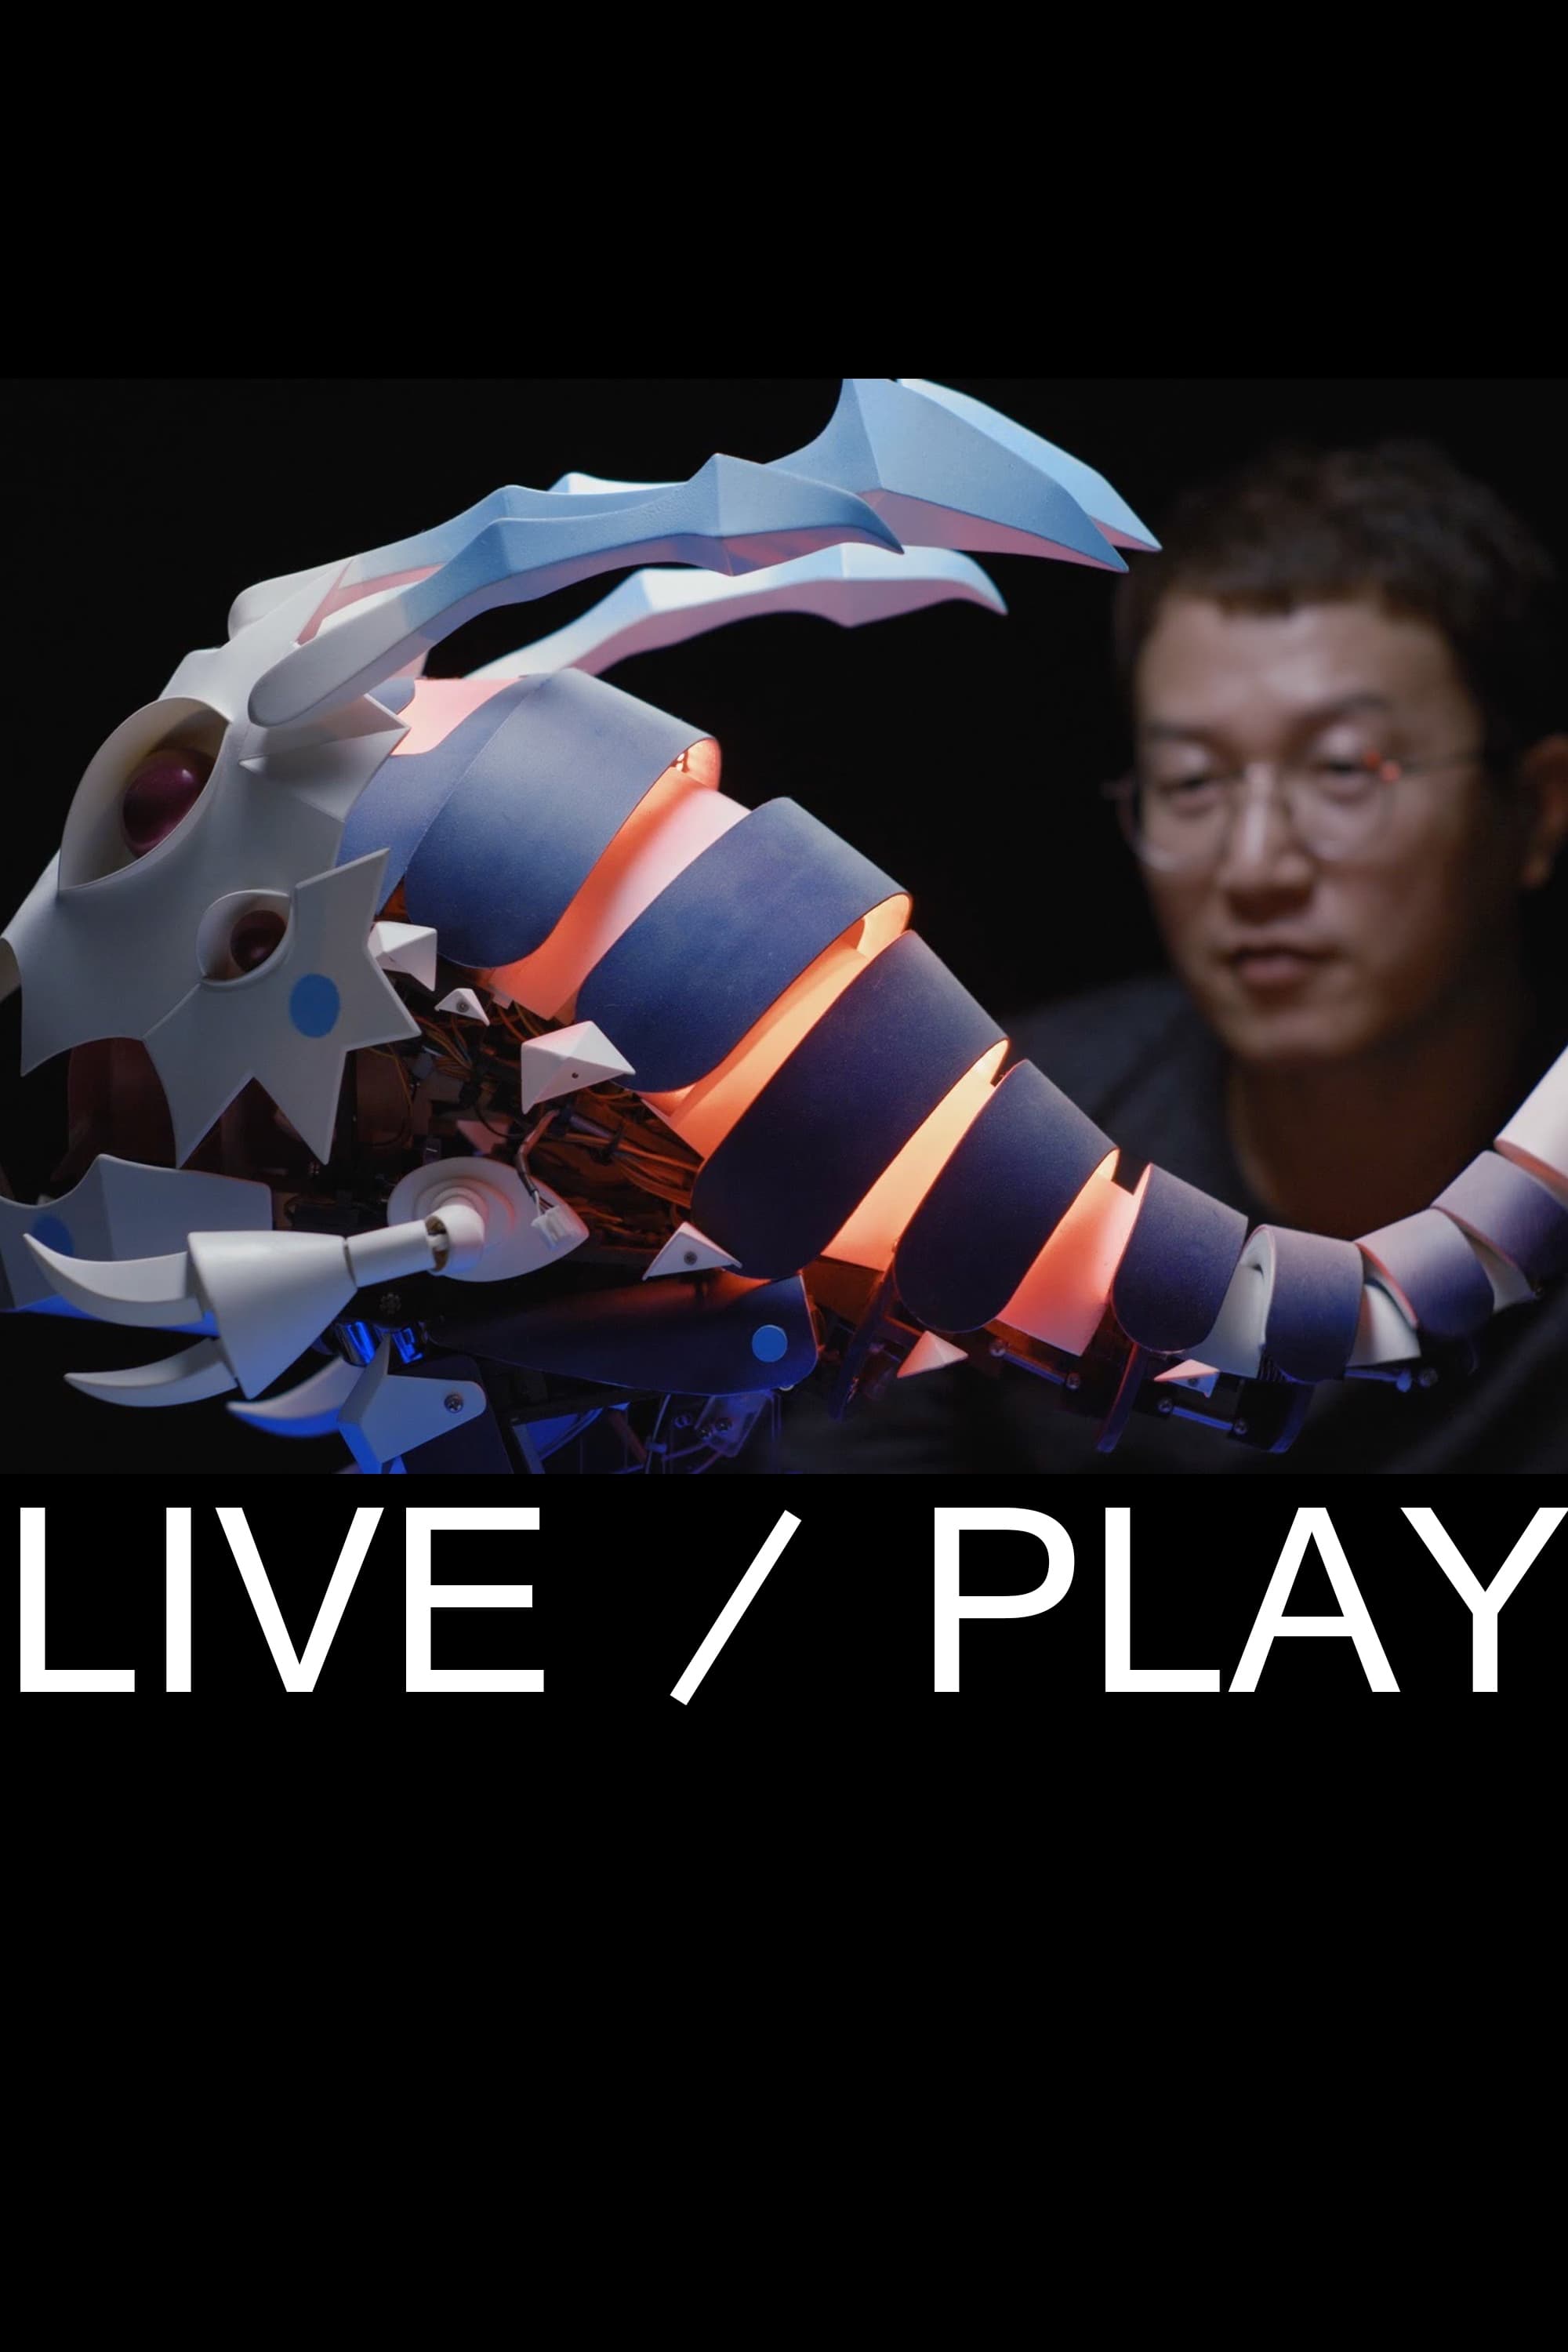 Live/Play 2015 - League of Legends